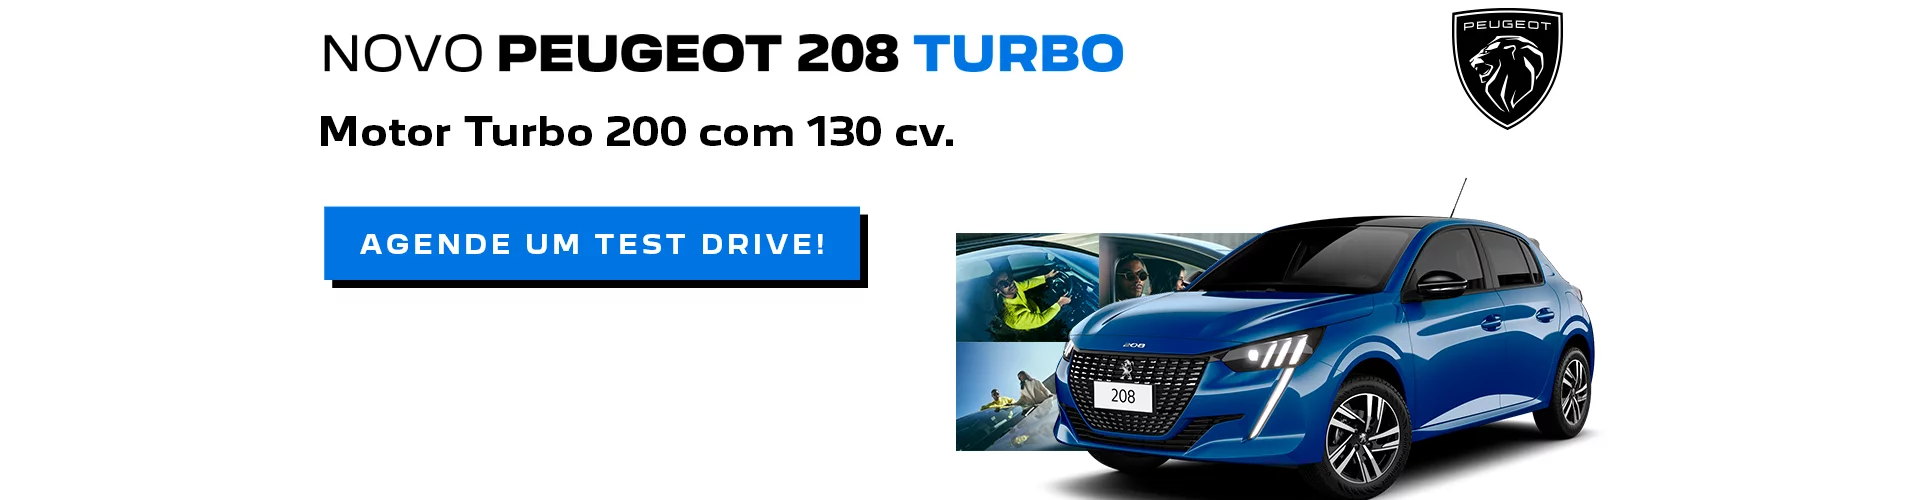 Novo Peugeot 208 Turbo